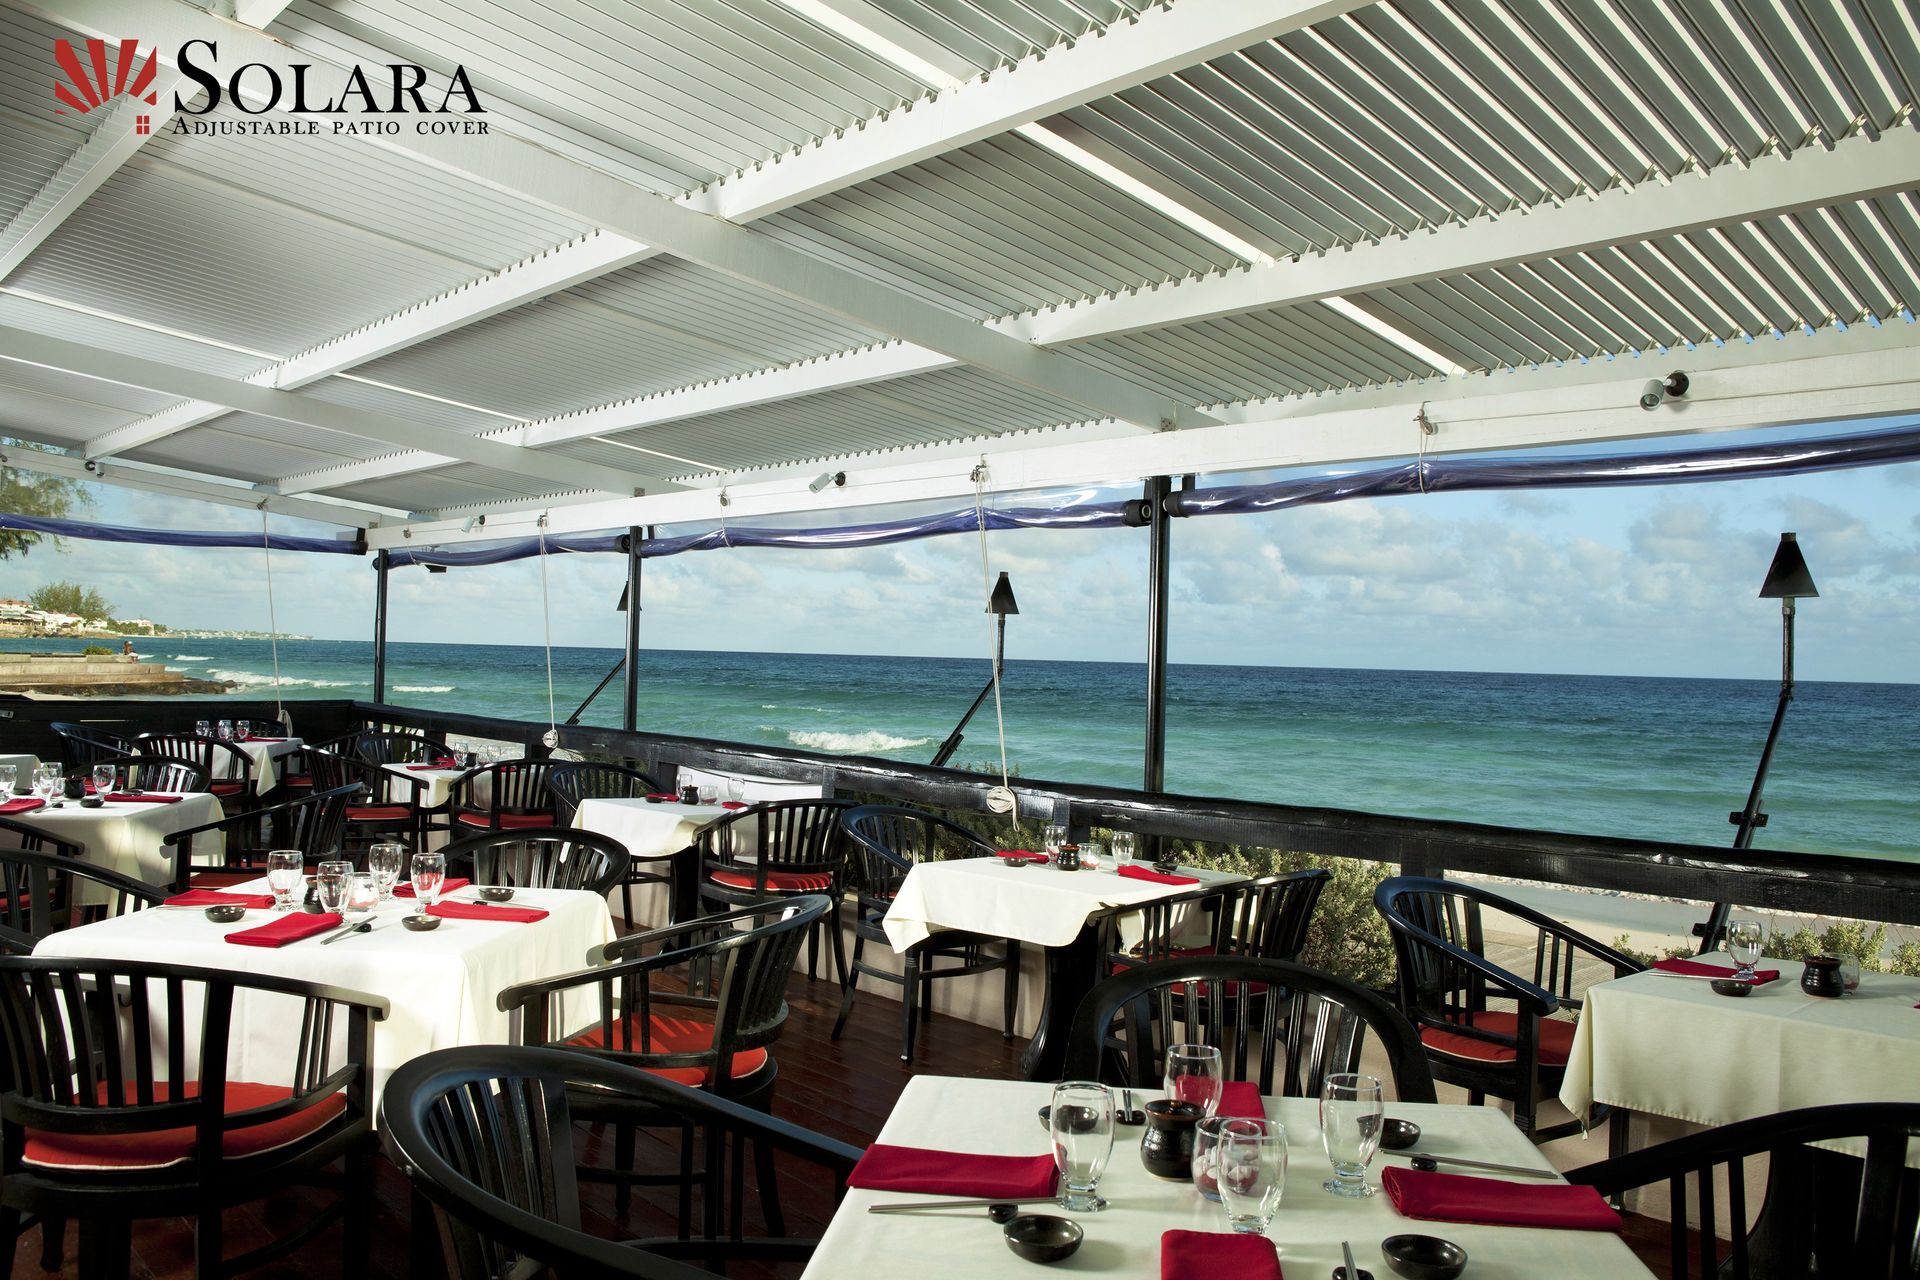 Solara Louvered Patio Cover Over Restaurant Dining Area